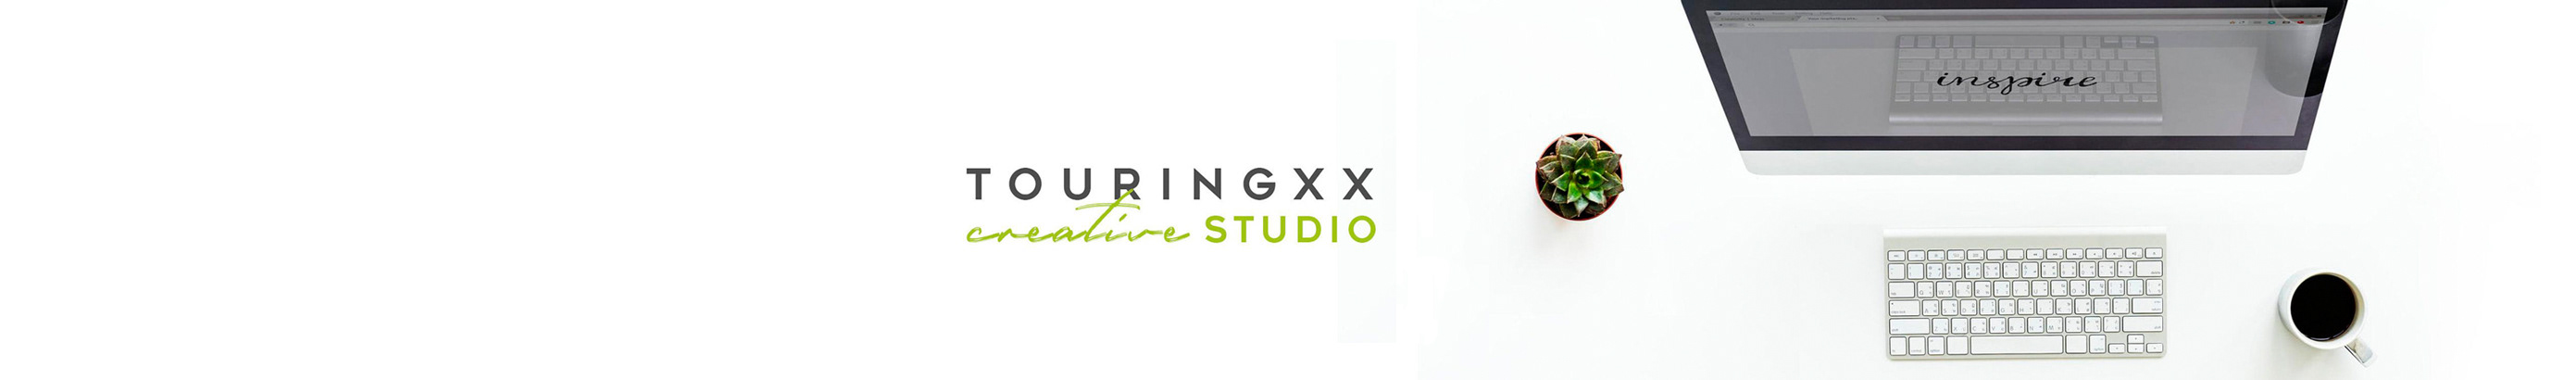 Touringxx Creative Studio's profile banner